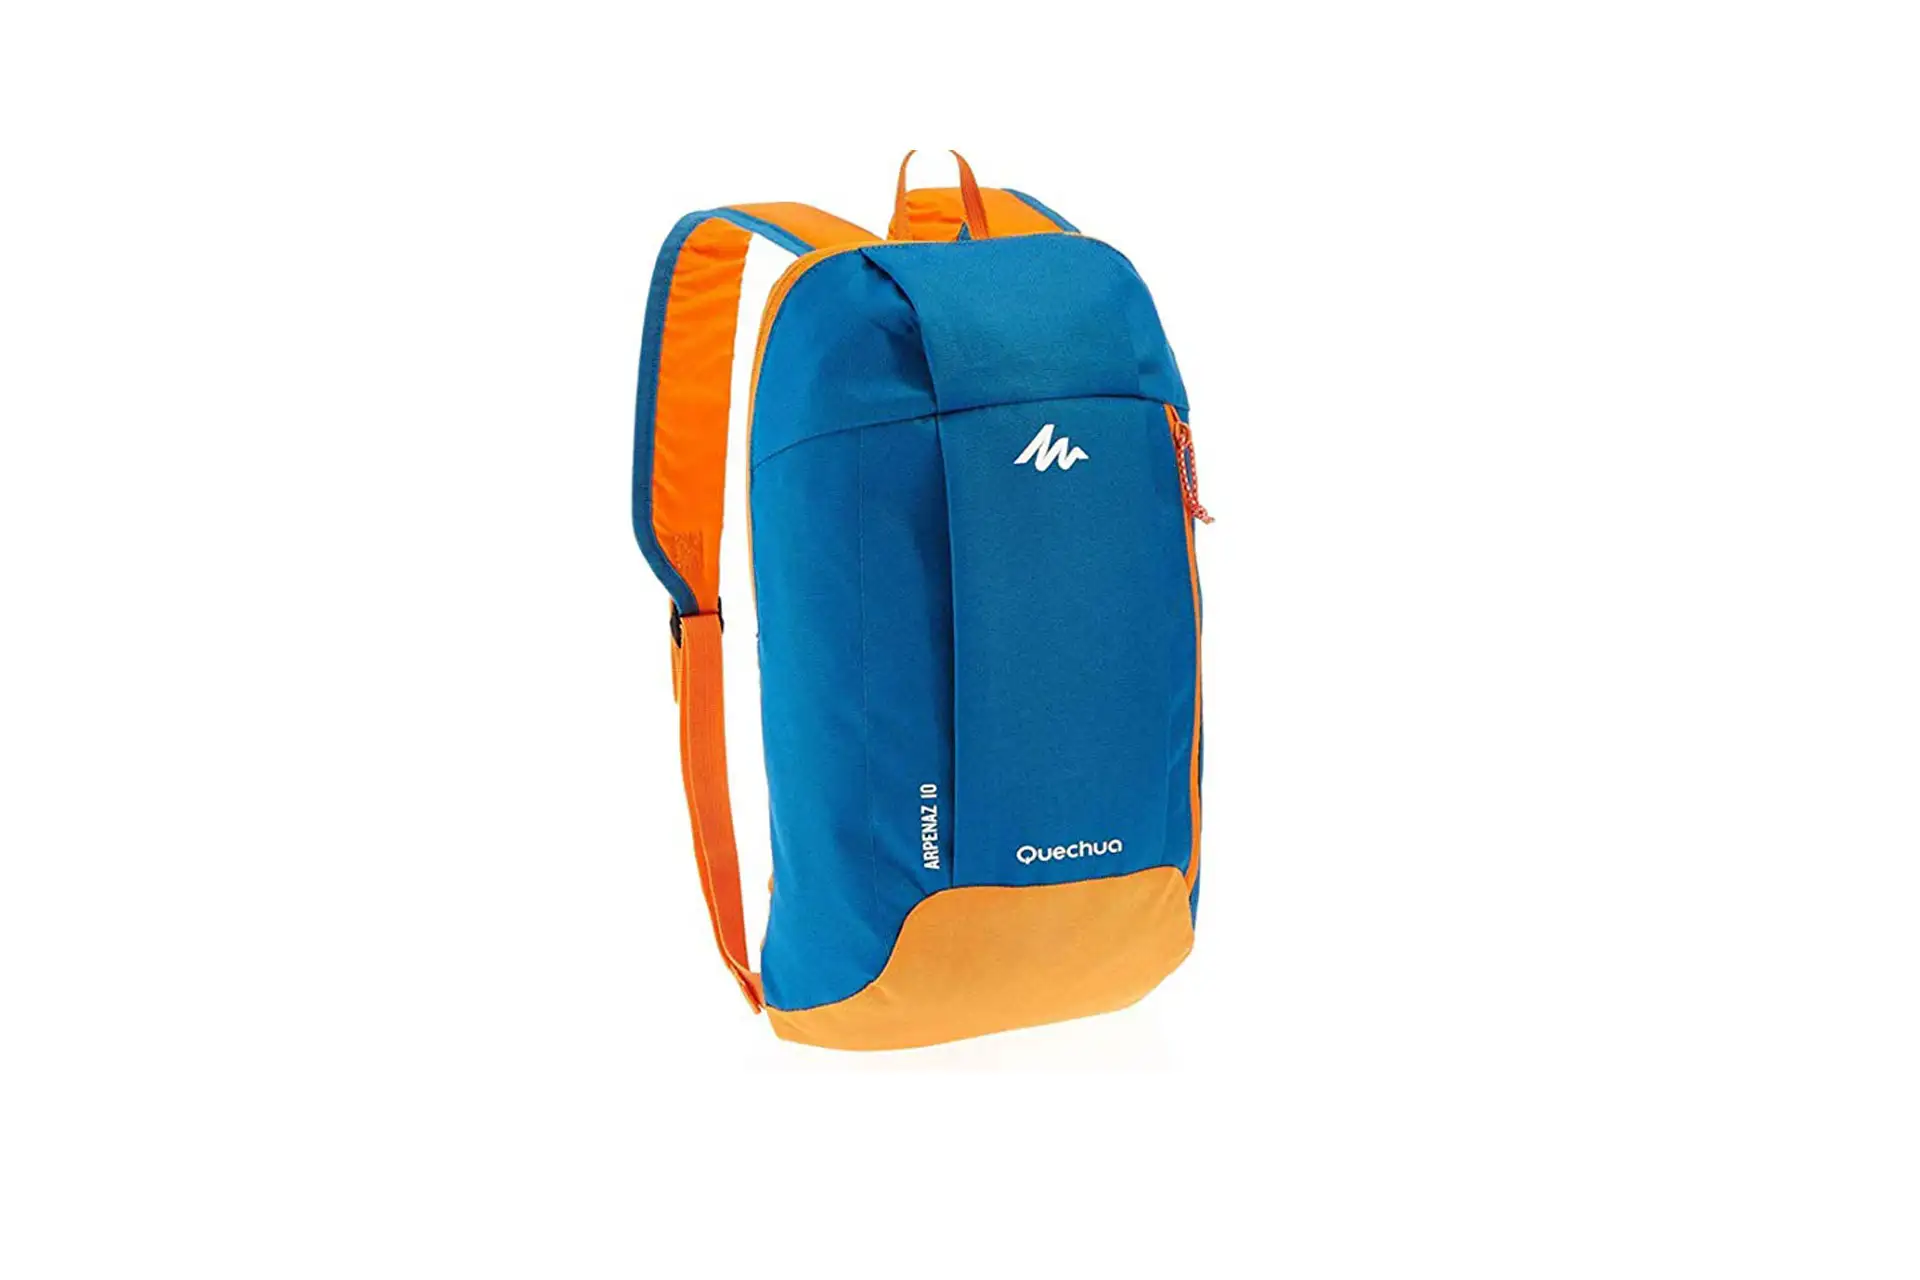 Daybag Backpack; Courtesy of Amazon